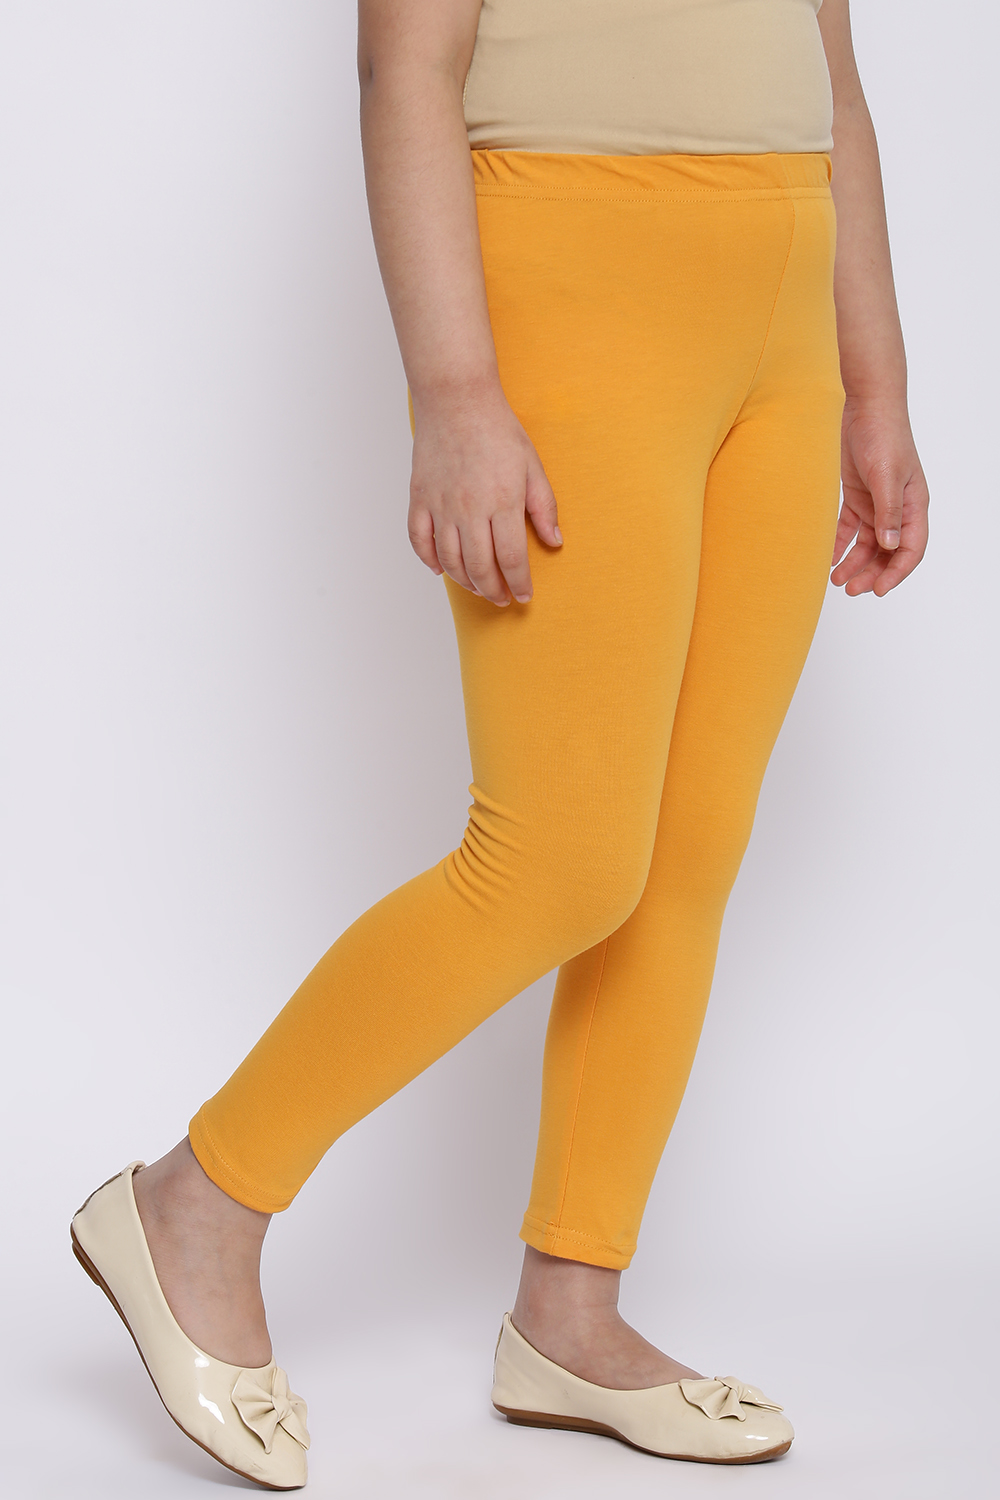 Buy Tangerine Cotton Lycra Solid Leggings (Leggings) for N/A0.0